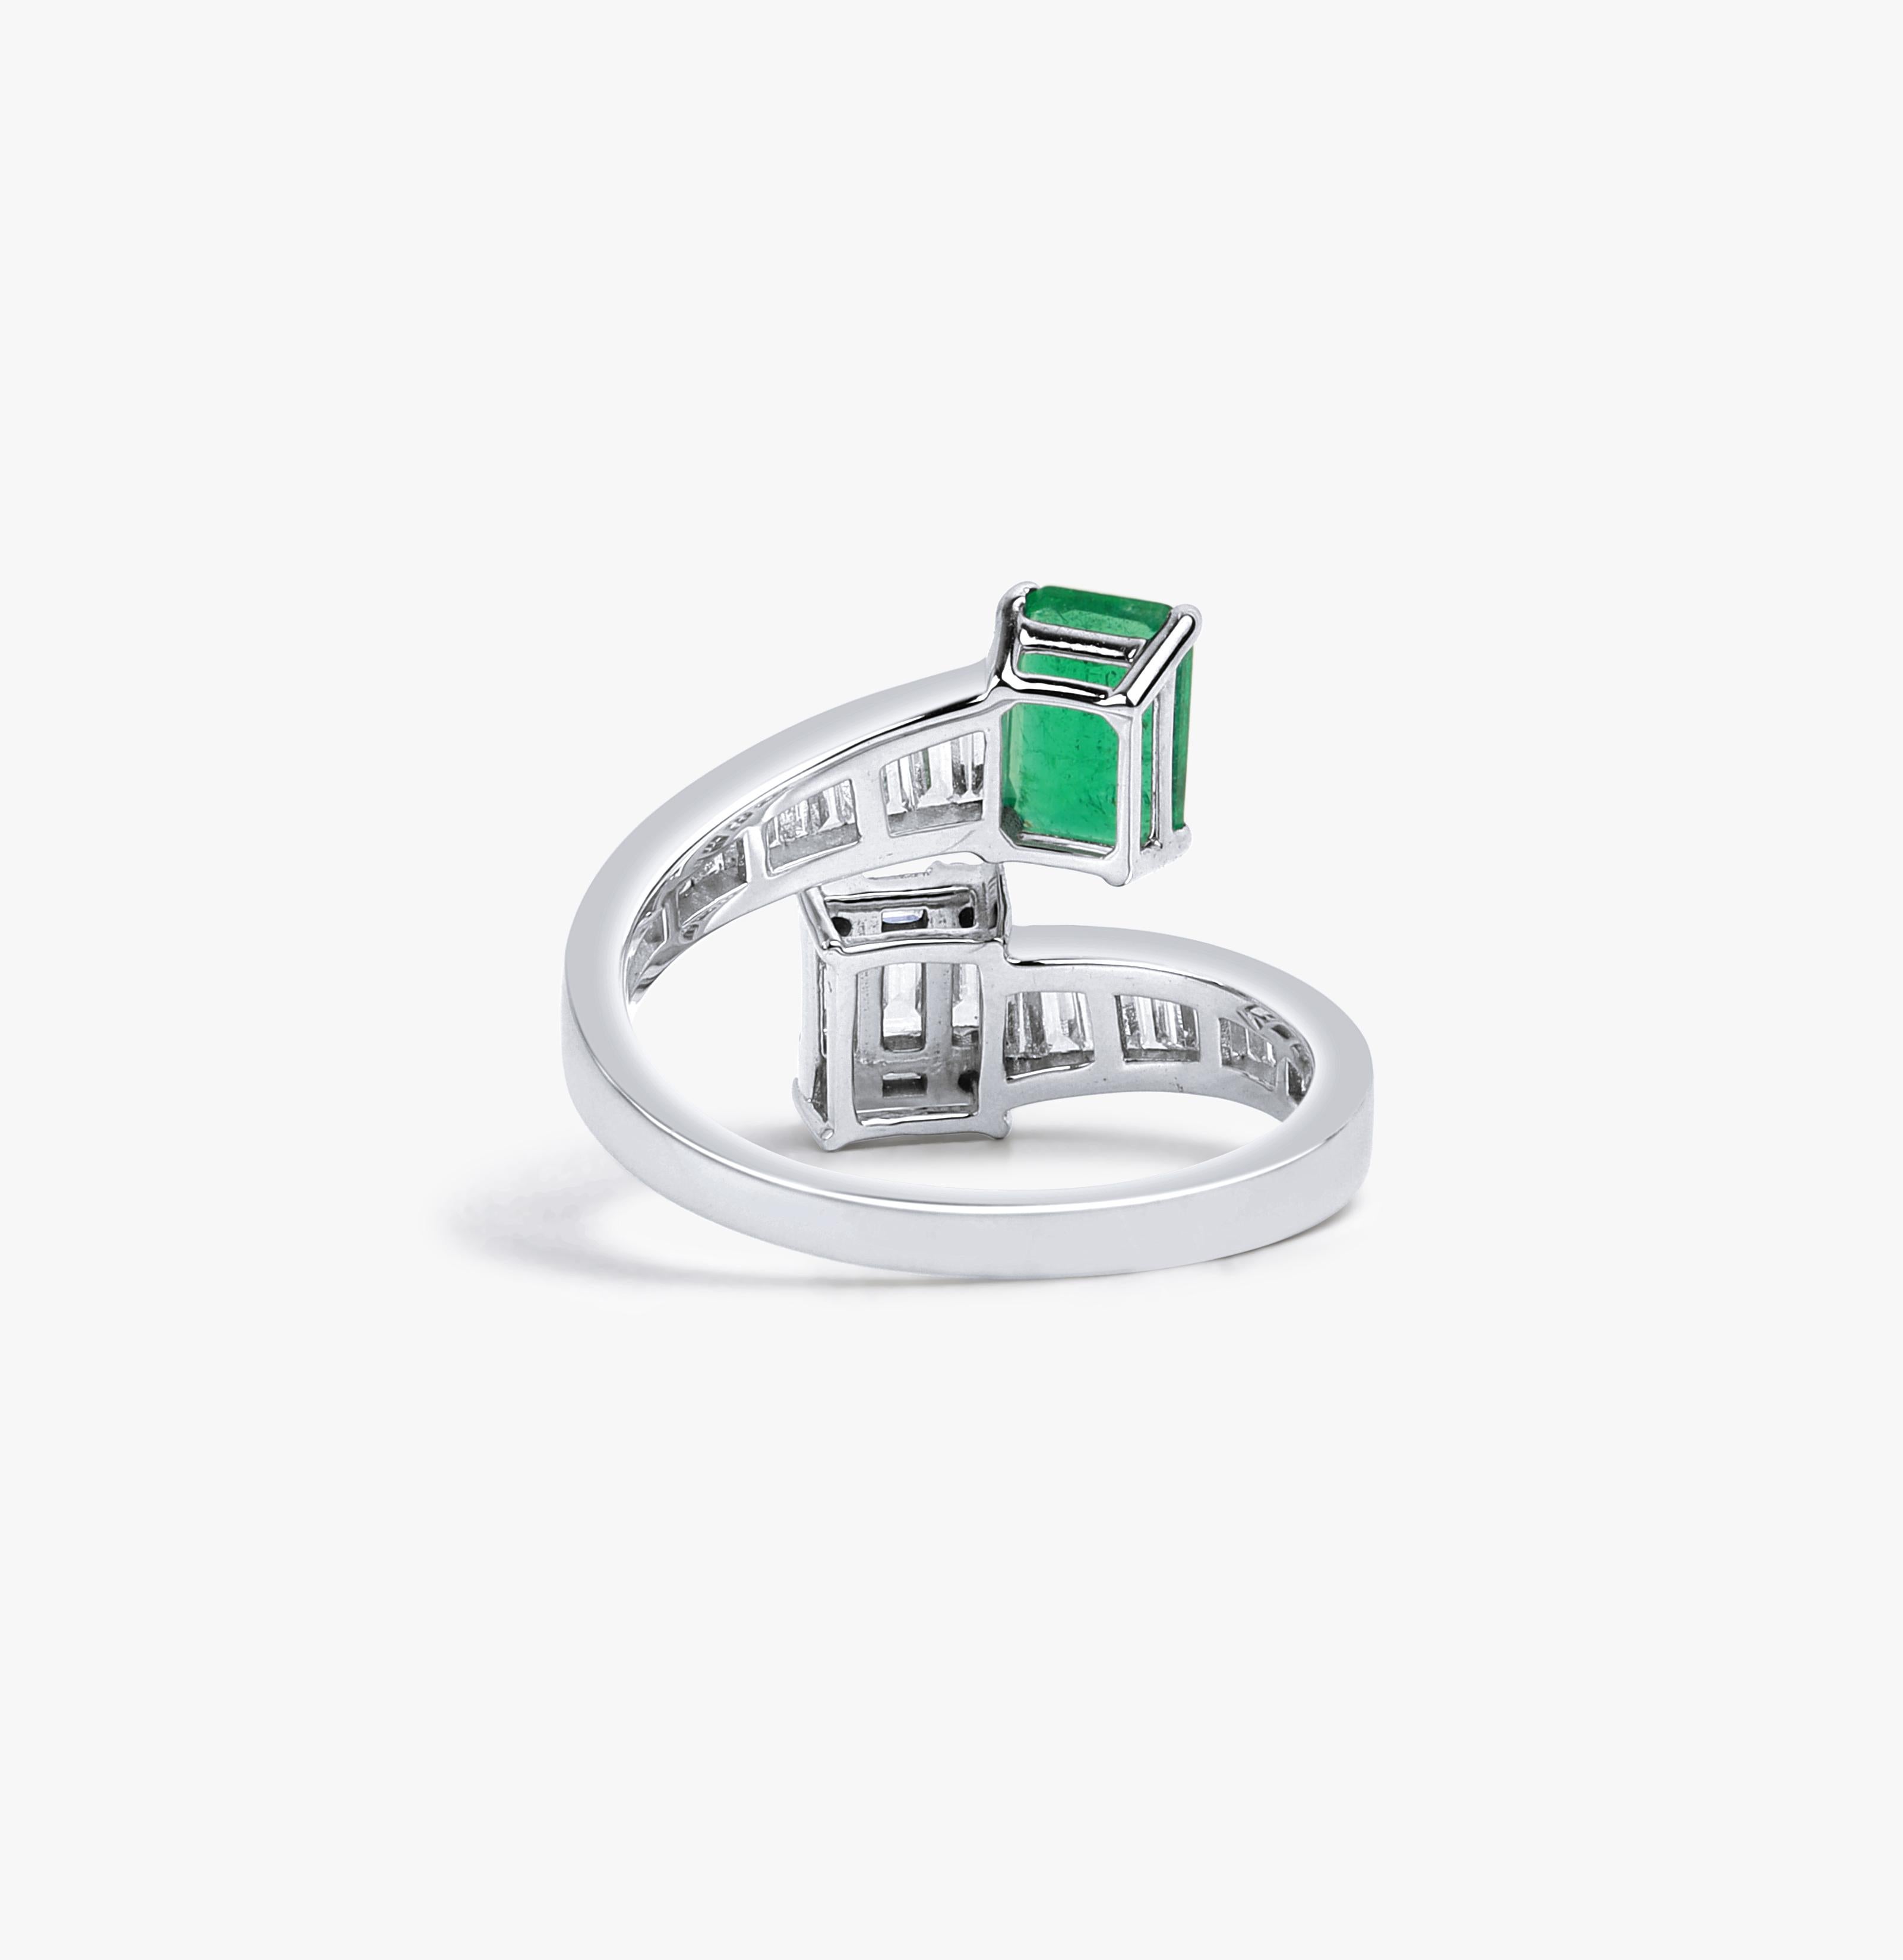 Women's Emerald Cut 2 Carat Emerald Diamond Baguette Cut Cocktail Engagement Ring